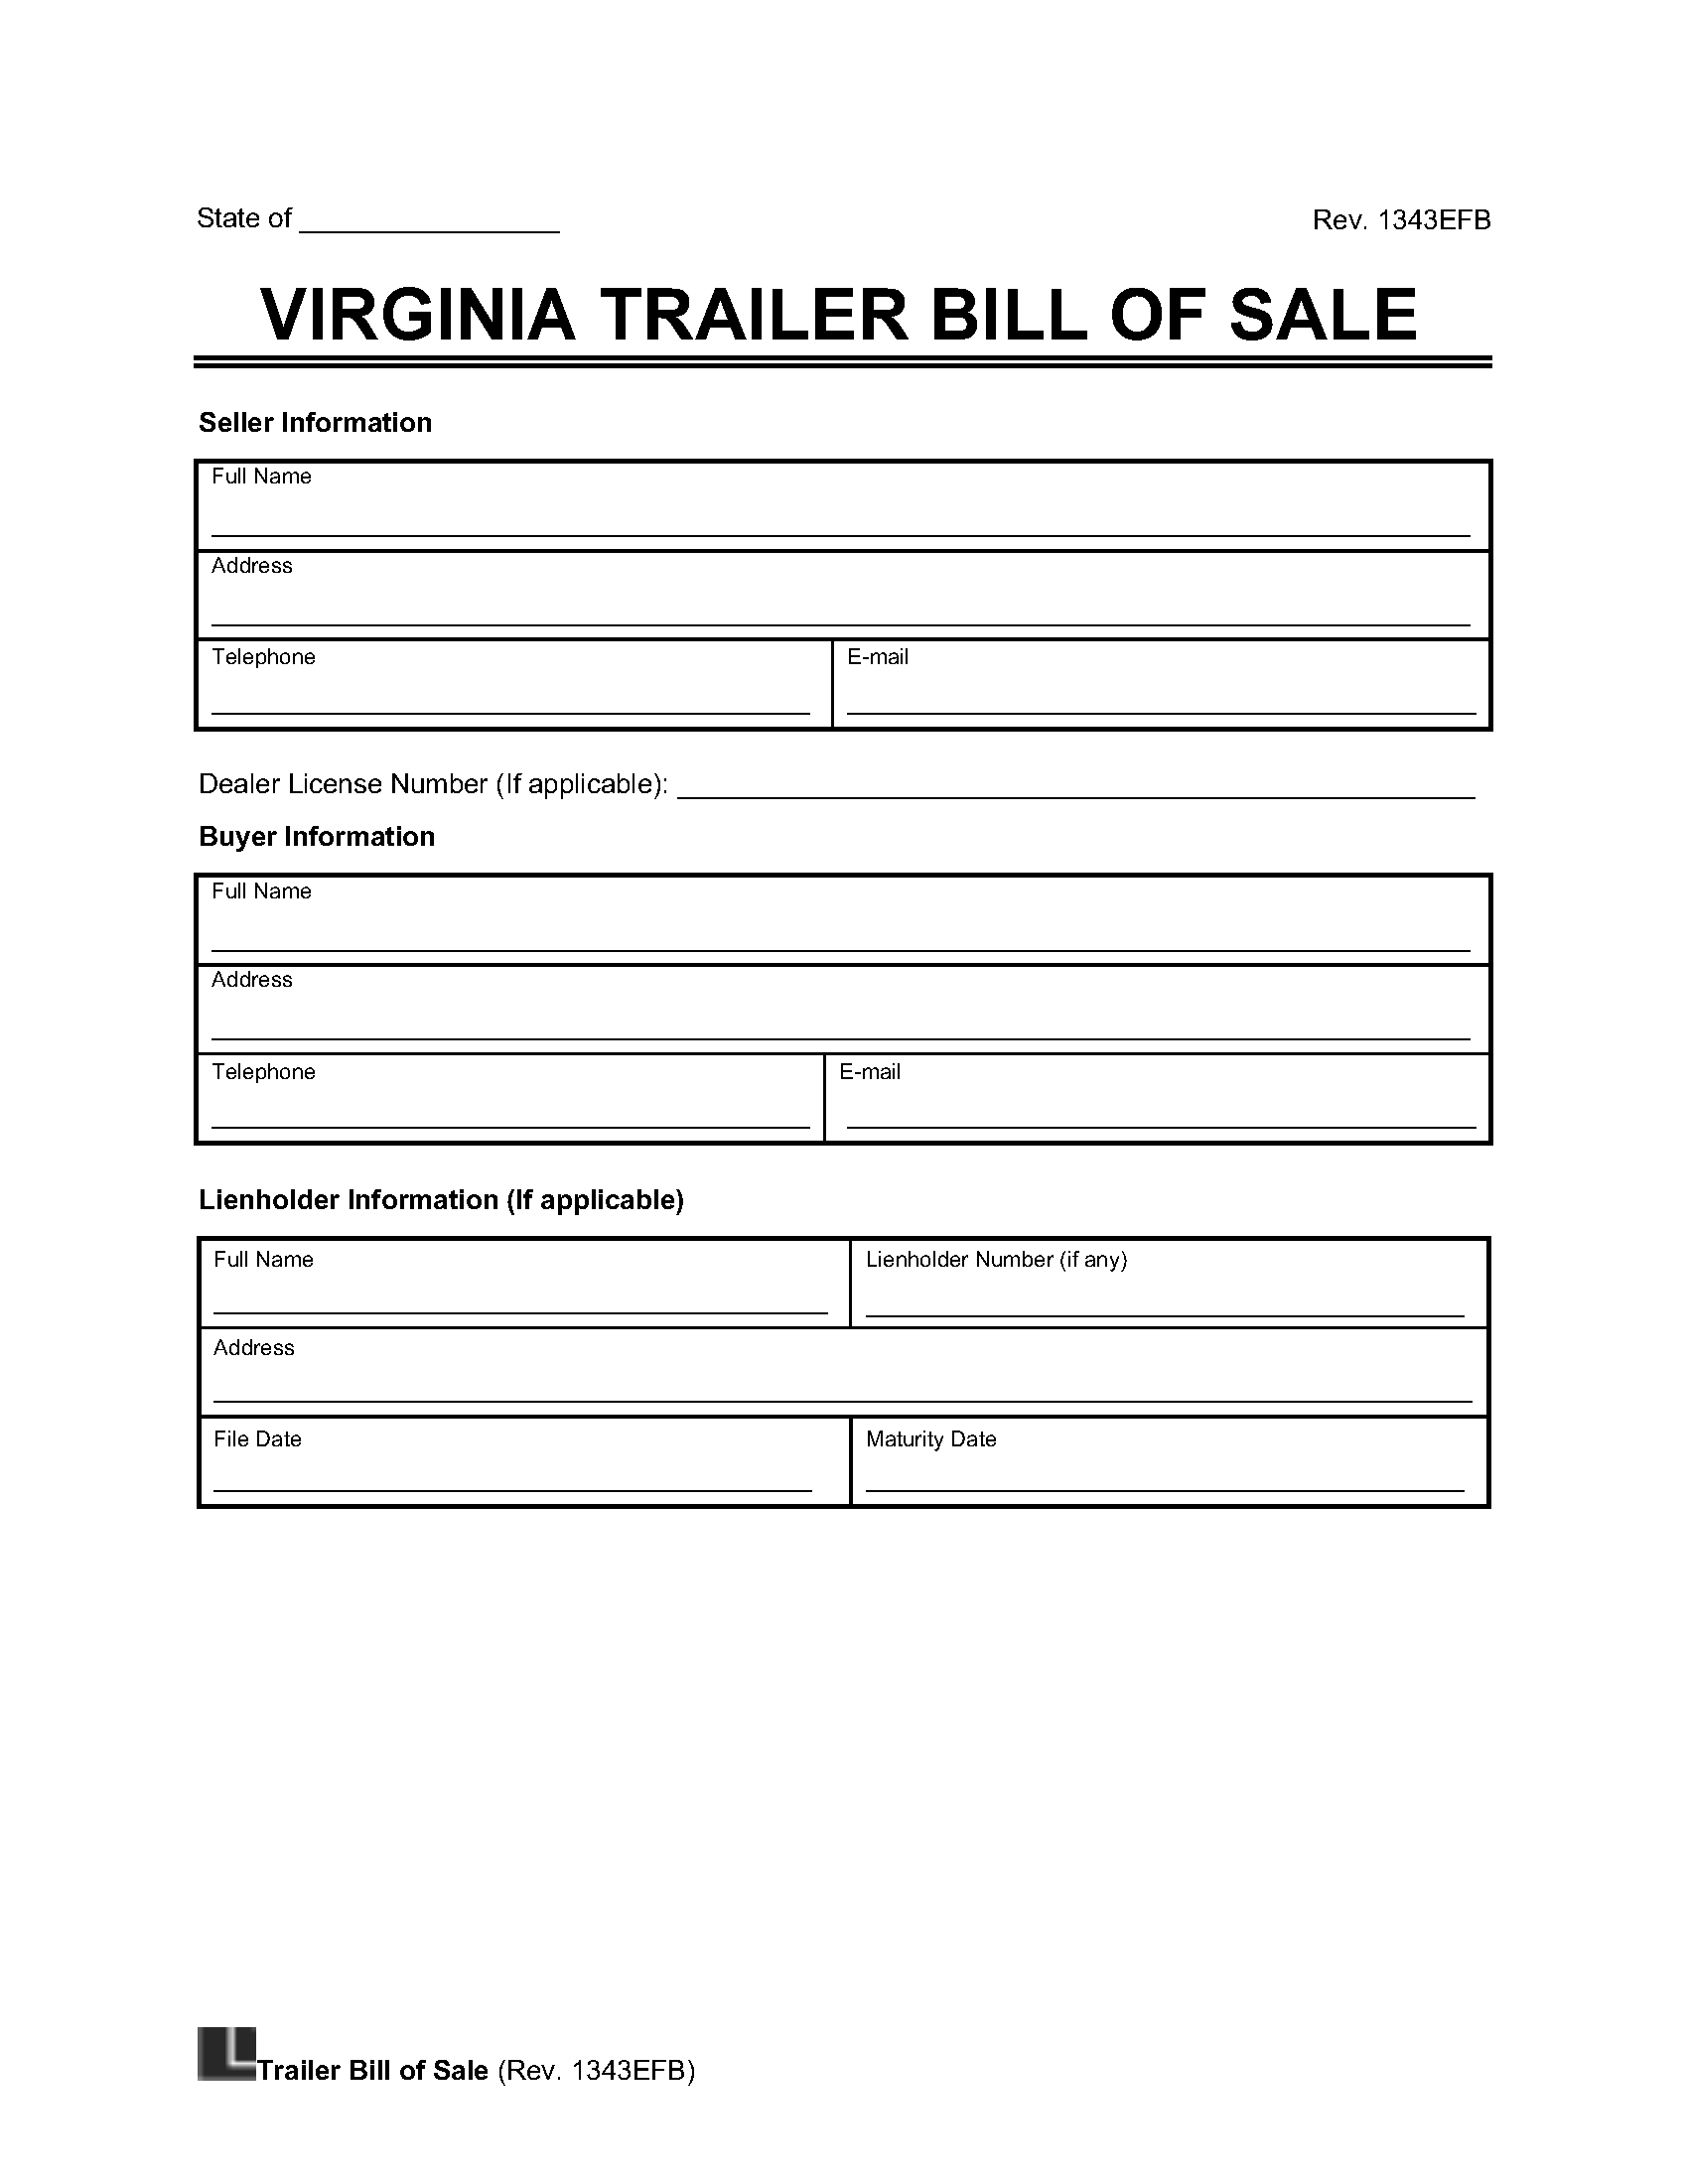 Virginia Trailer Bill of Sale screenshot